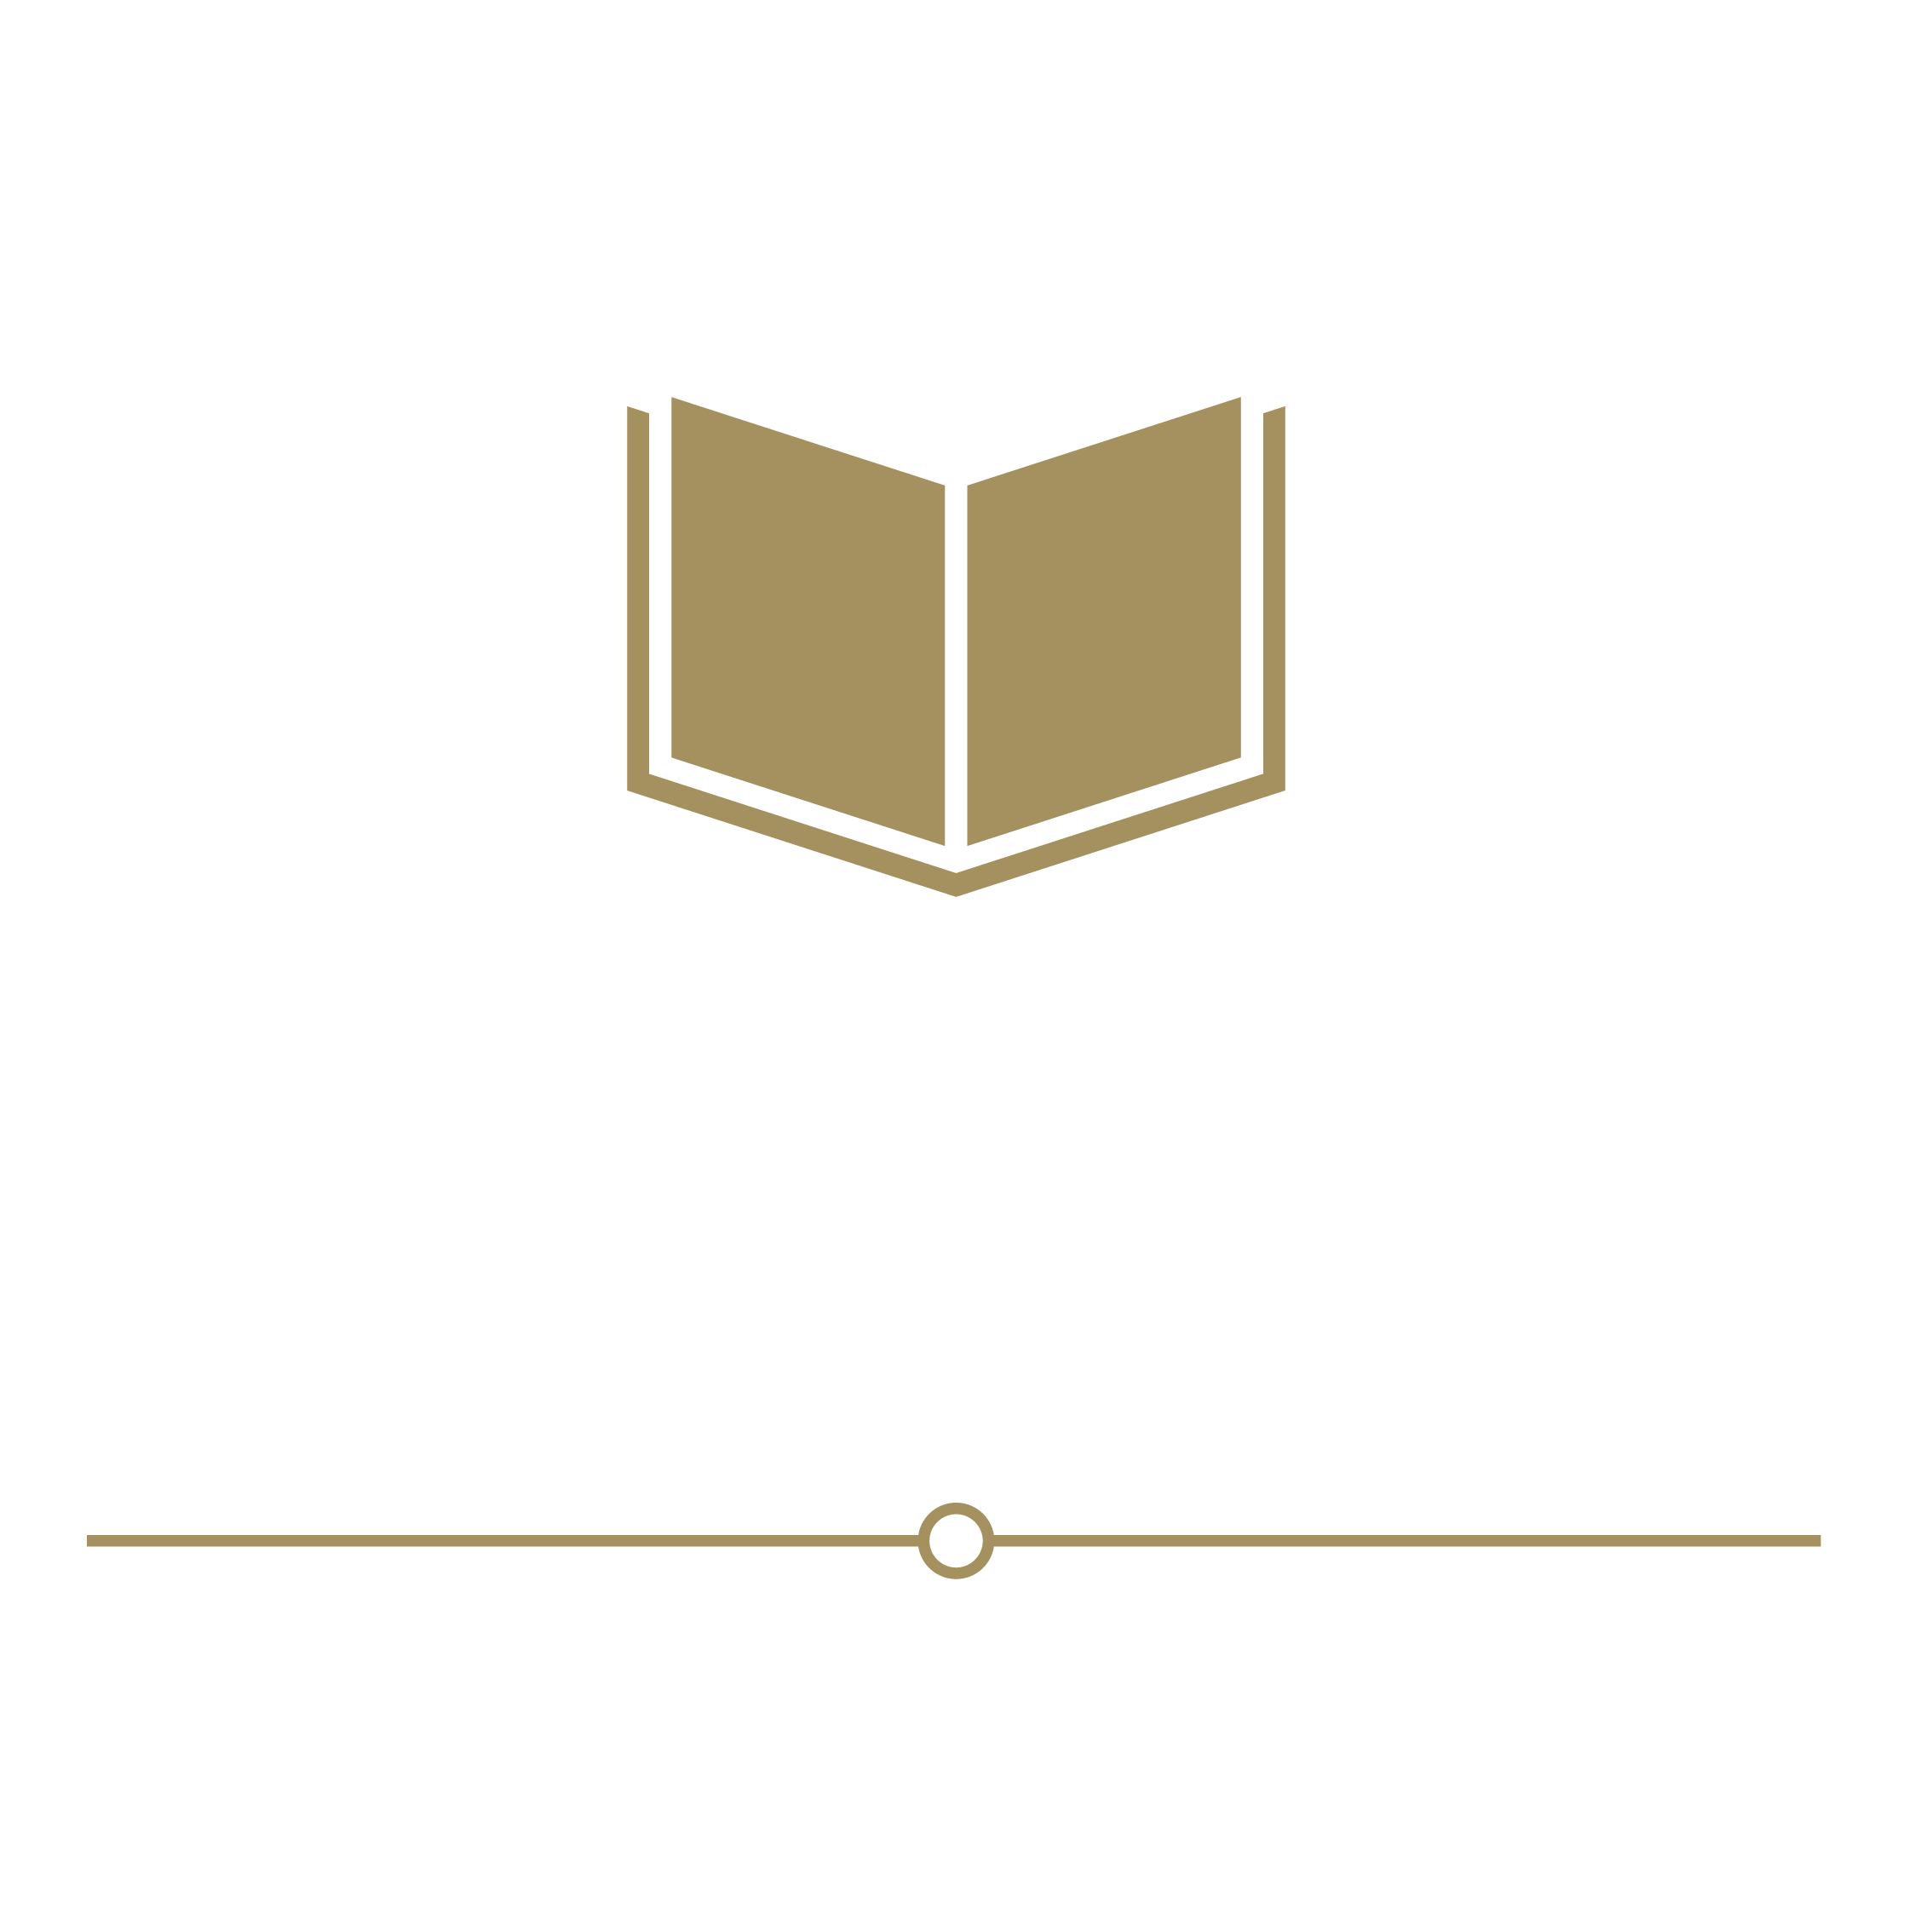 Chester Ceremonies